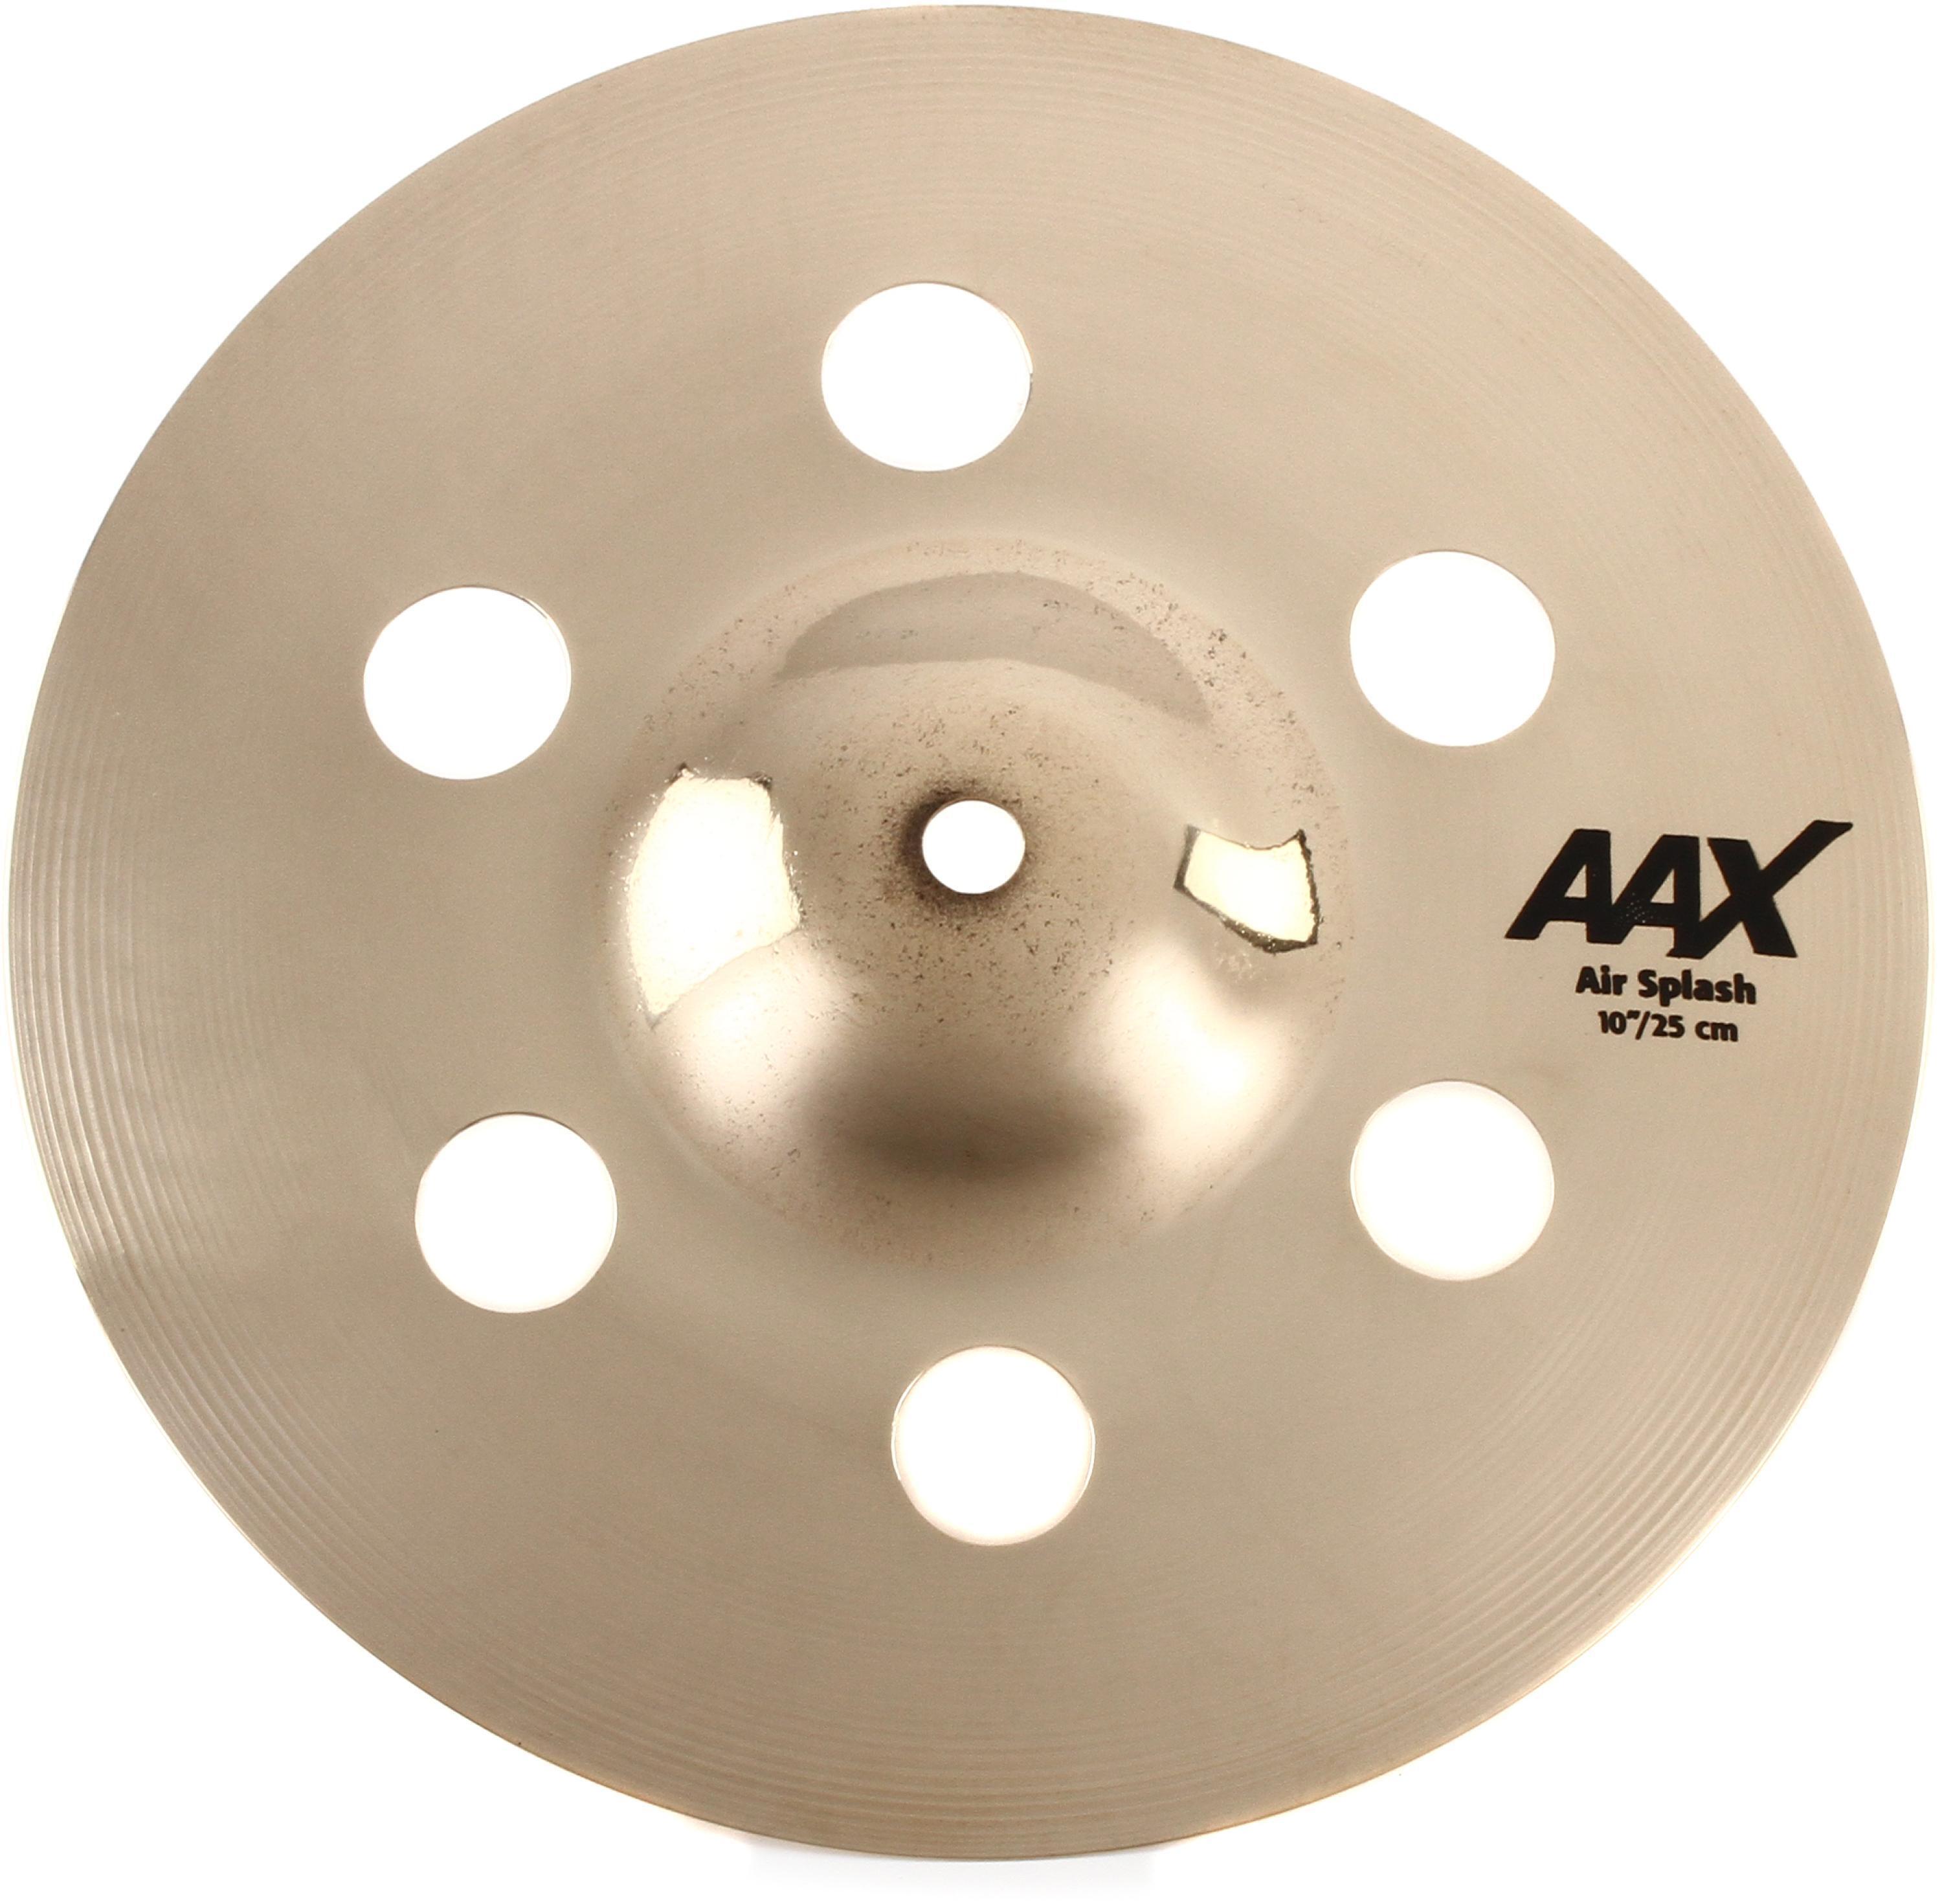 10 inch AAX Air Splash Cymbal - Brilliant Finish - Sweetwater